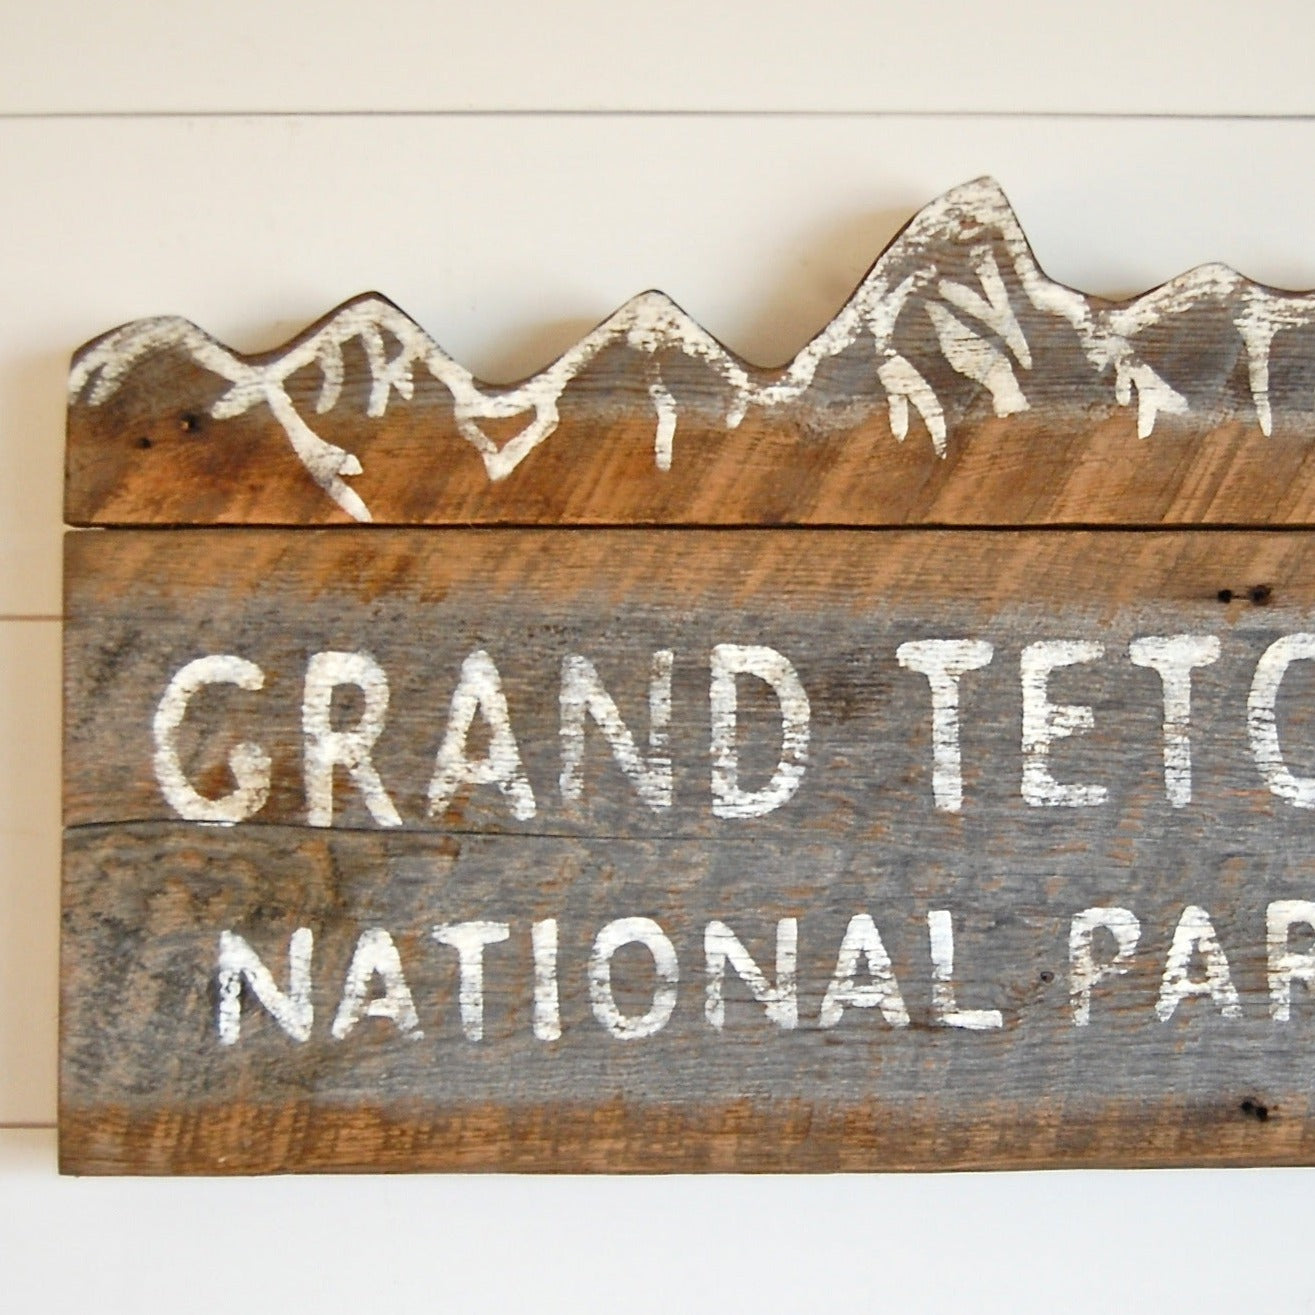 Grand Teton Barnwood Sign